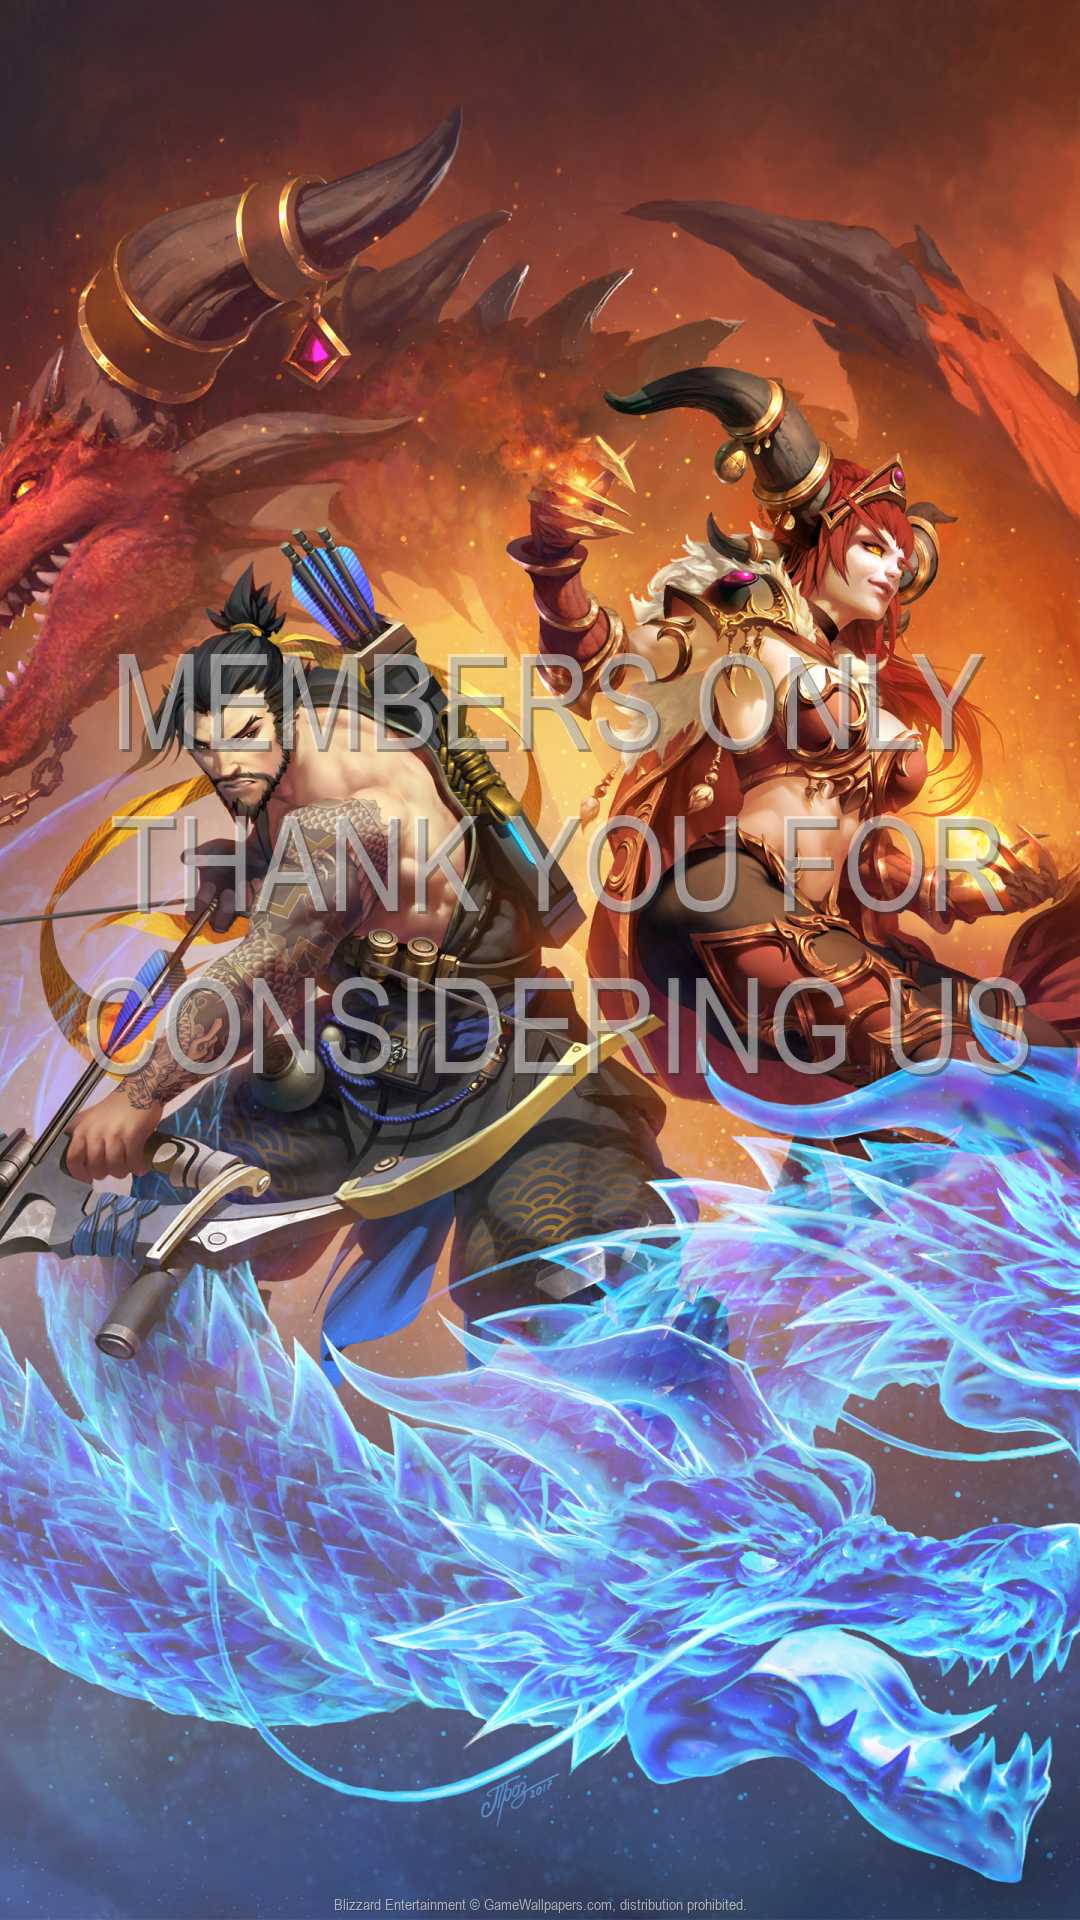 Blizzard Entertainment 1080p%20Vertical Mobile wallpaper or background 04